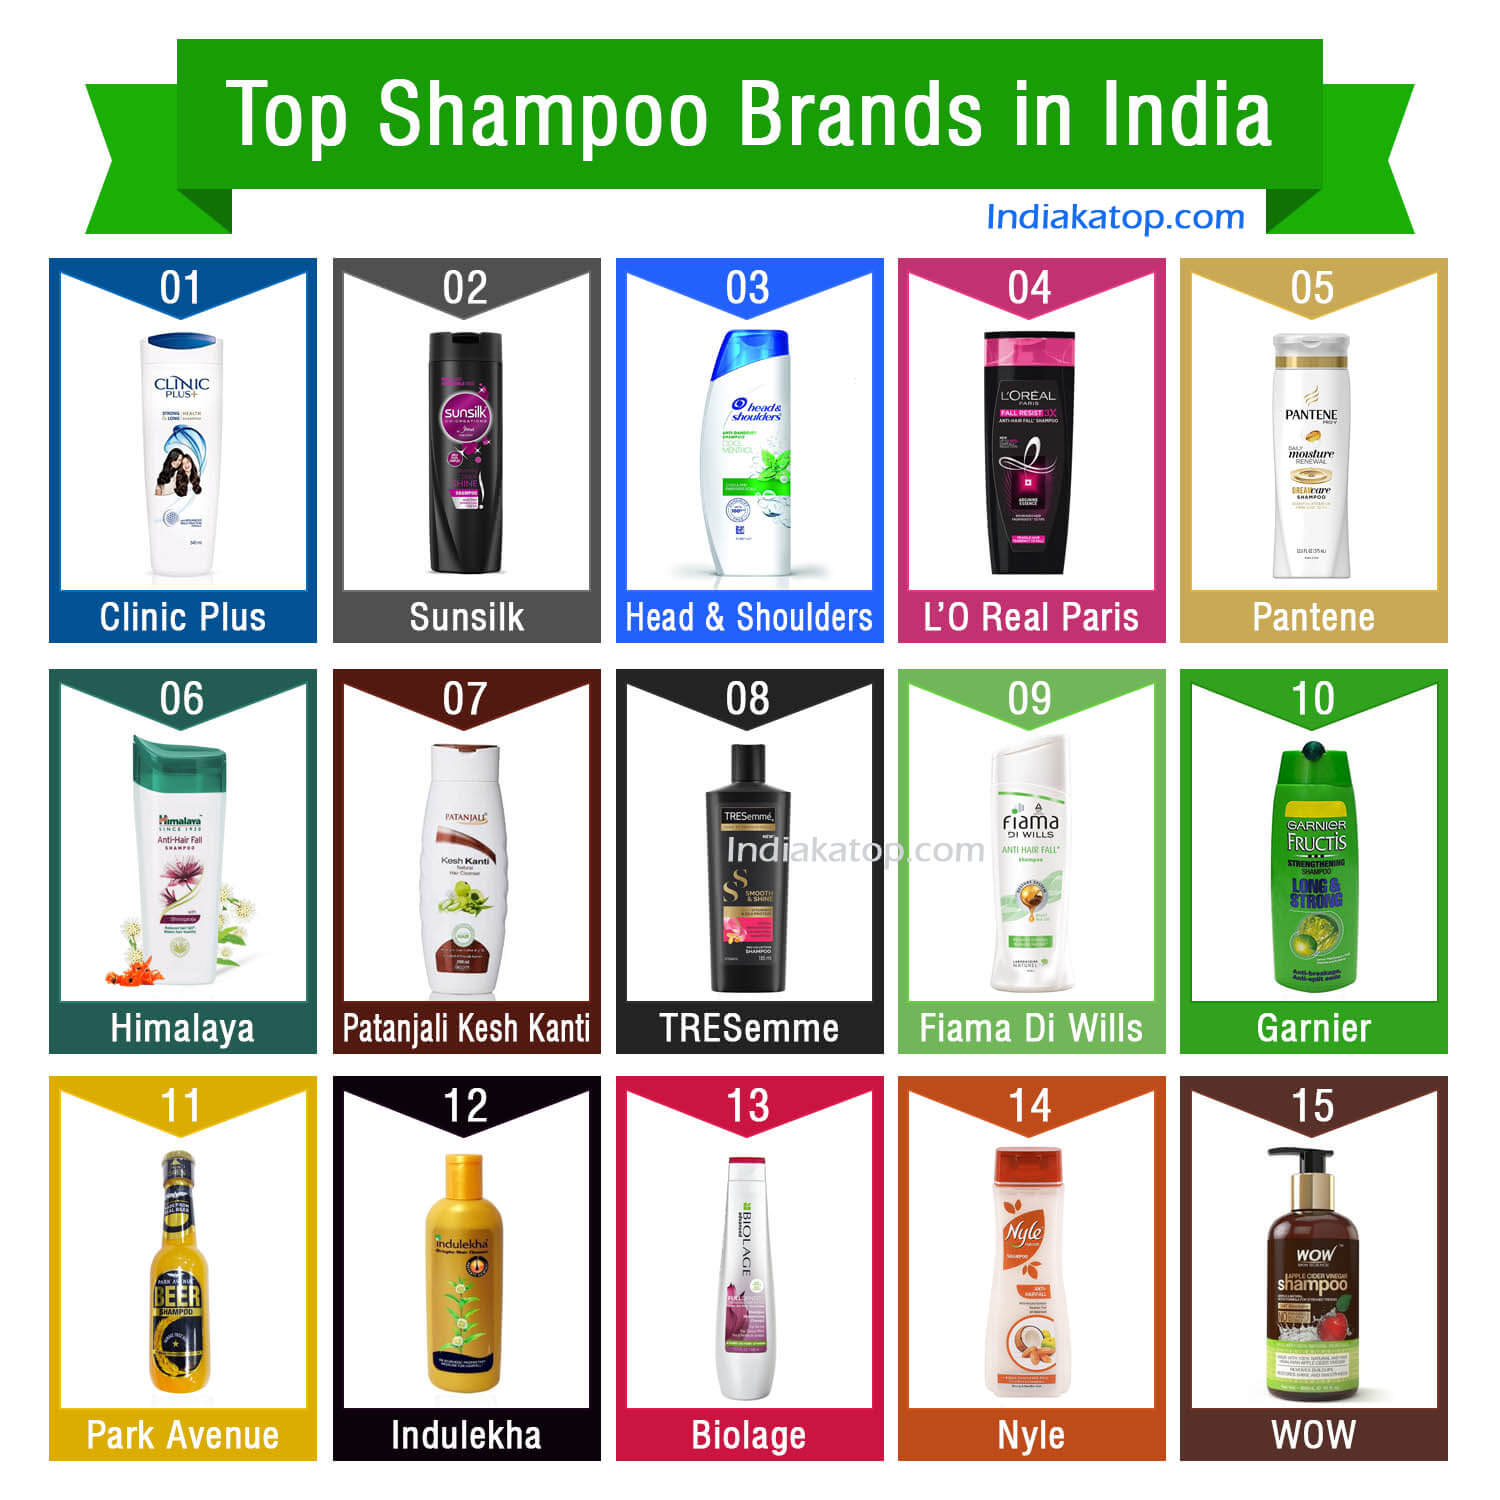 Top 15 Popular Shampoo Brands in India - 2021 List